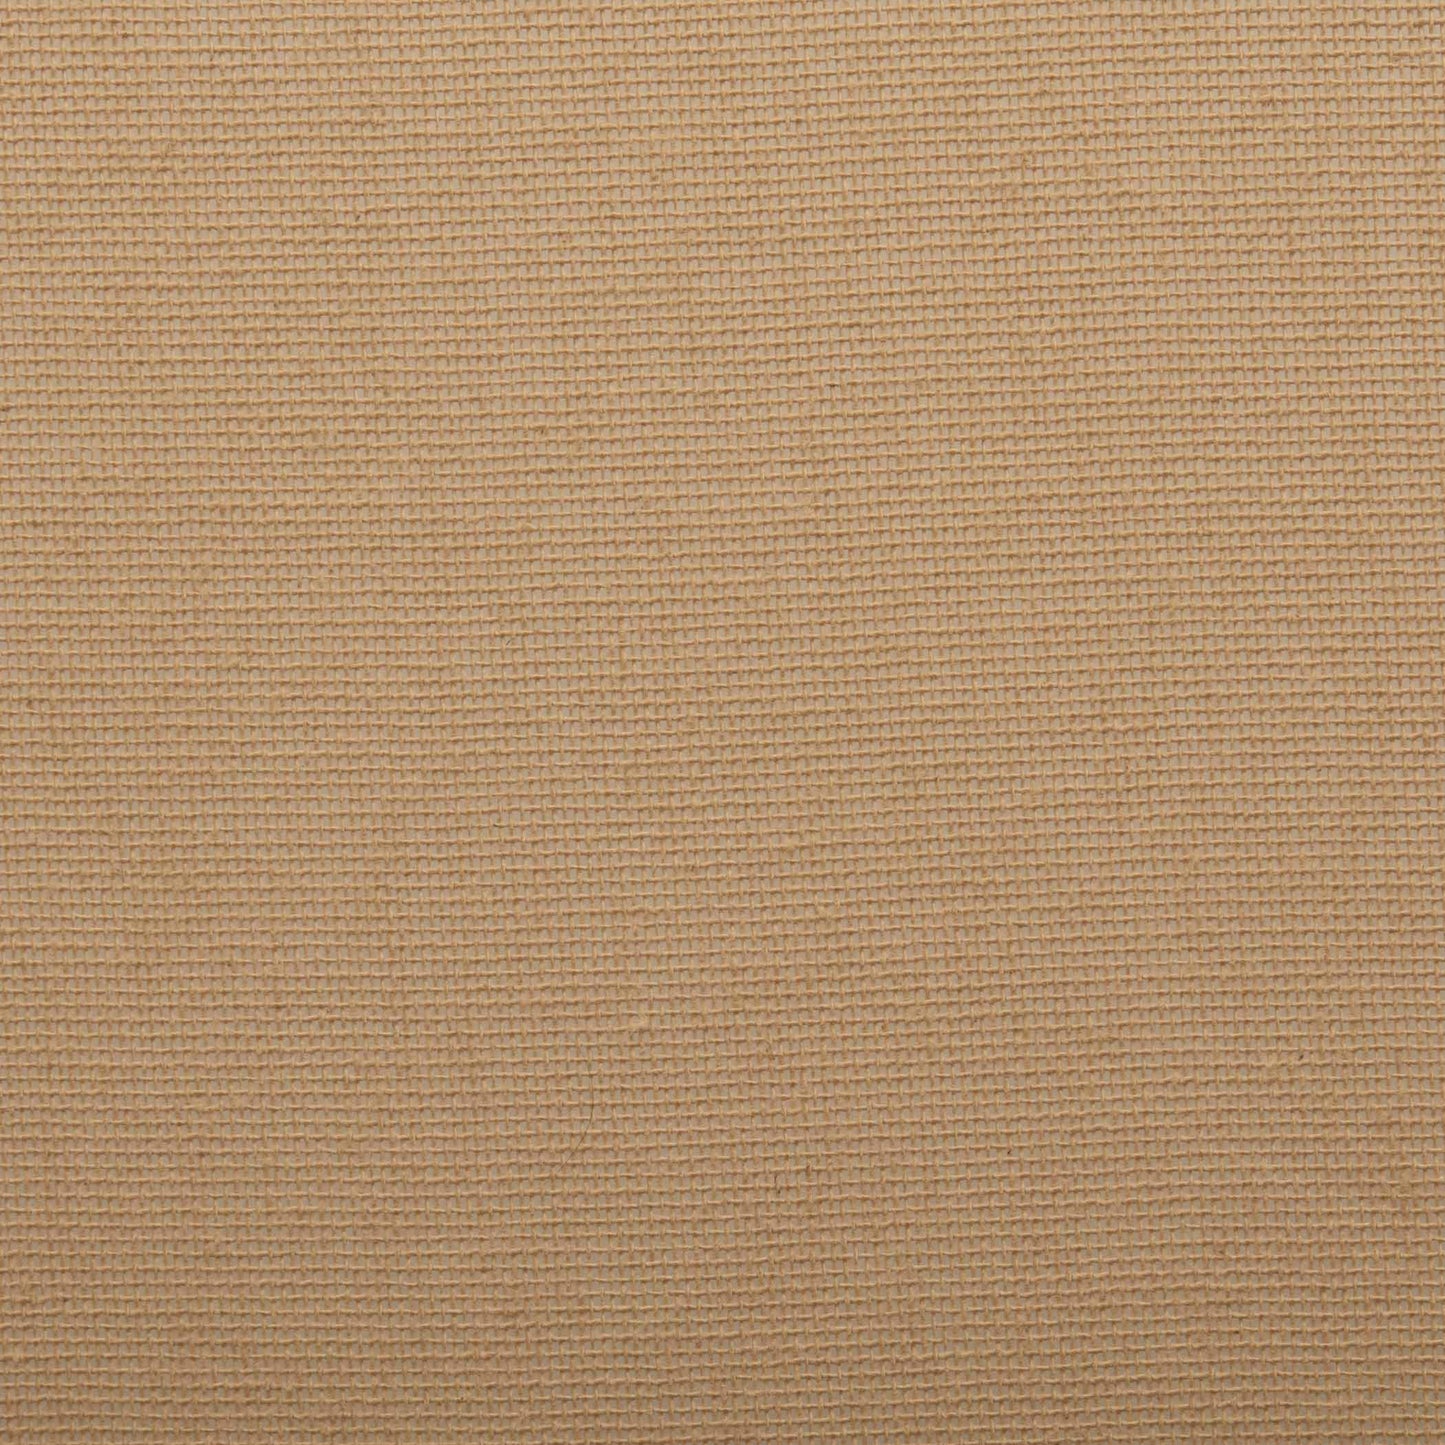 51391-Tobacco-Cloth-Khaki-Door-Panel-72x40-image-8